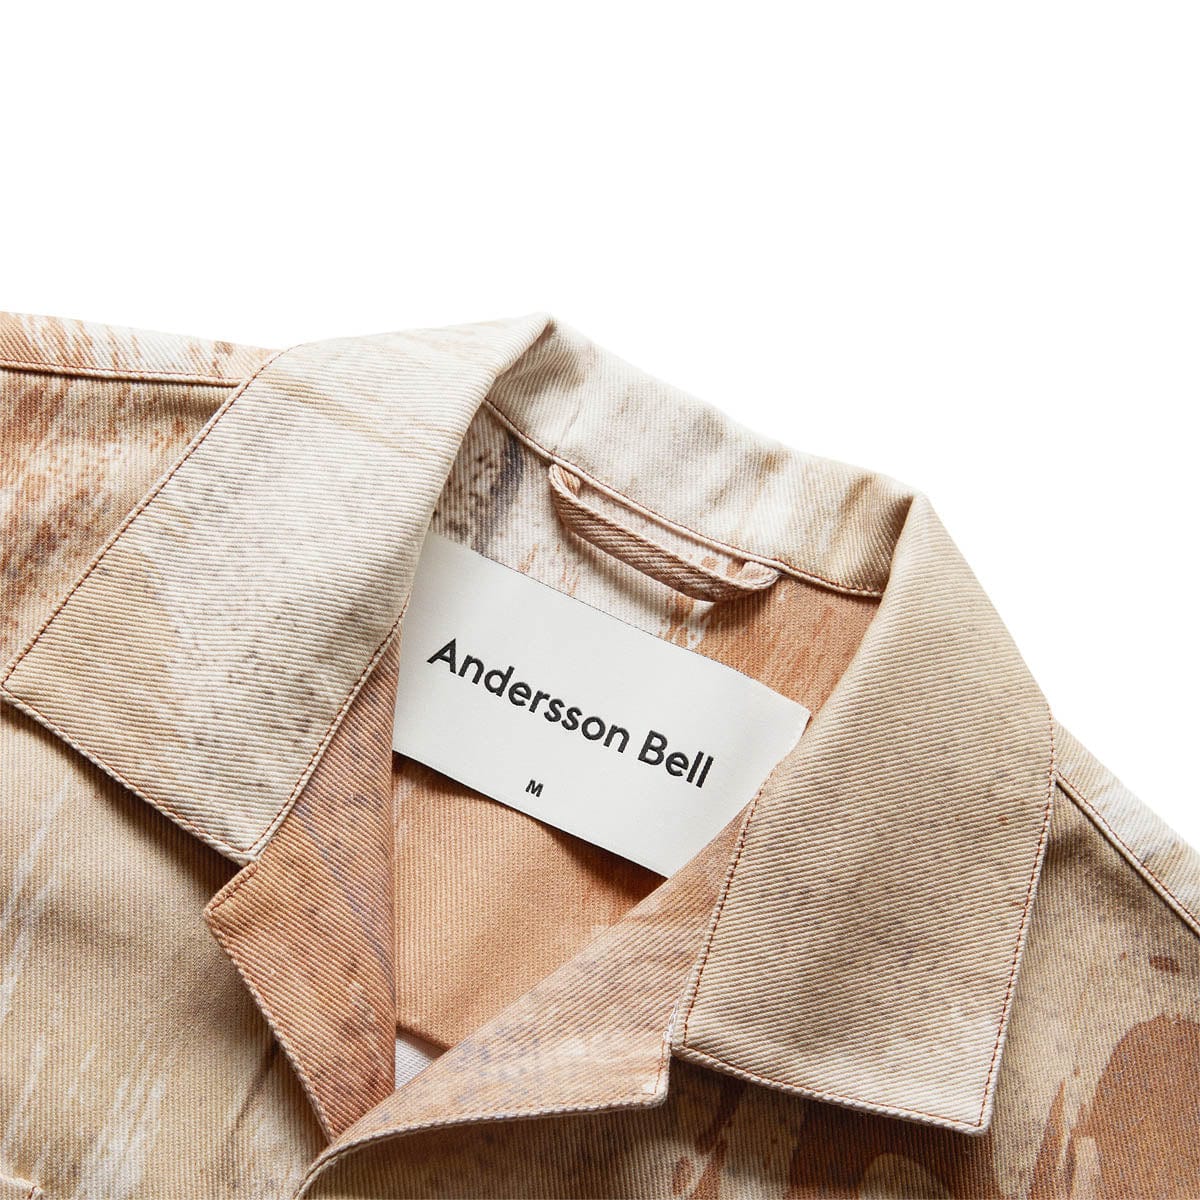 Andersson Bell Shirts TAWNEY BEIGE PRINT OPEN COLLAR SHIRT